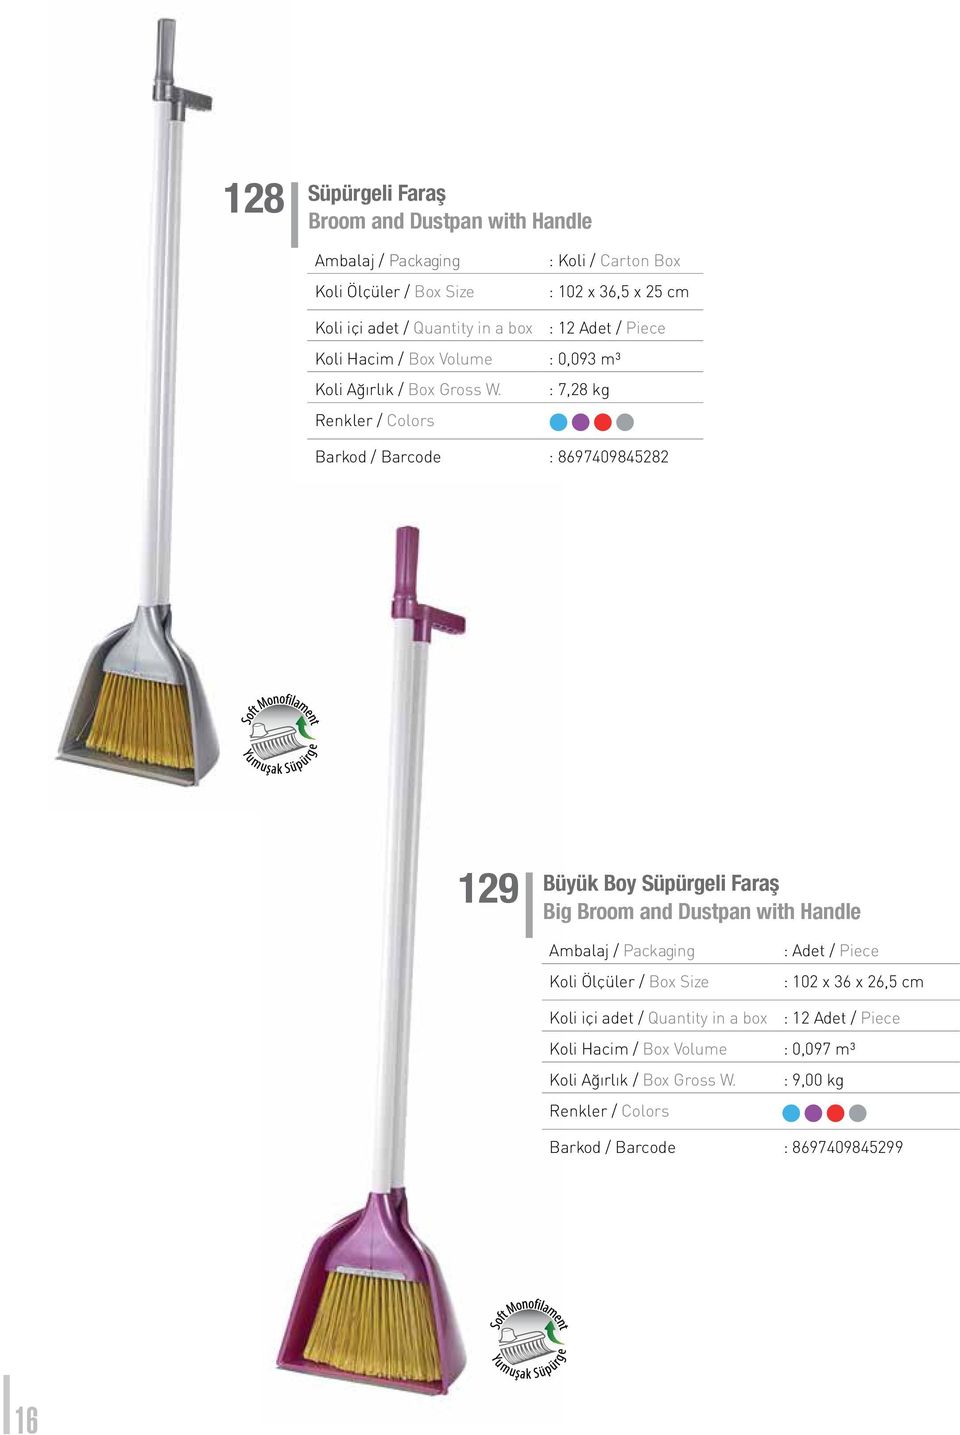 Süpürgeli Faraş Big Broom and Dustpan with Handle : Adet / Piece : 102 x 36 x 26,5 cm Koli içi adet /